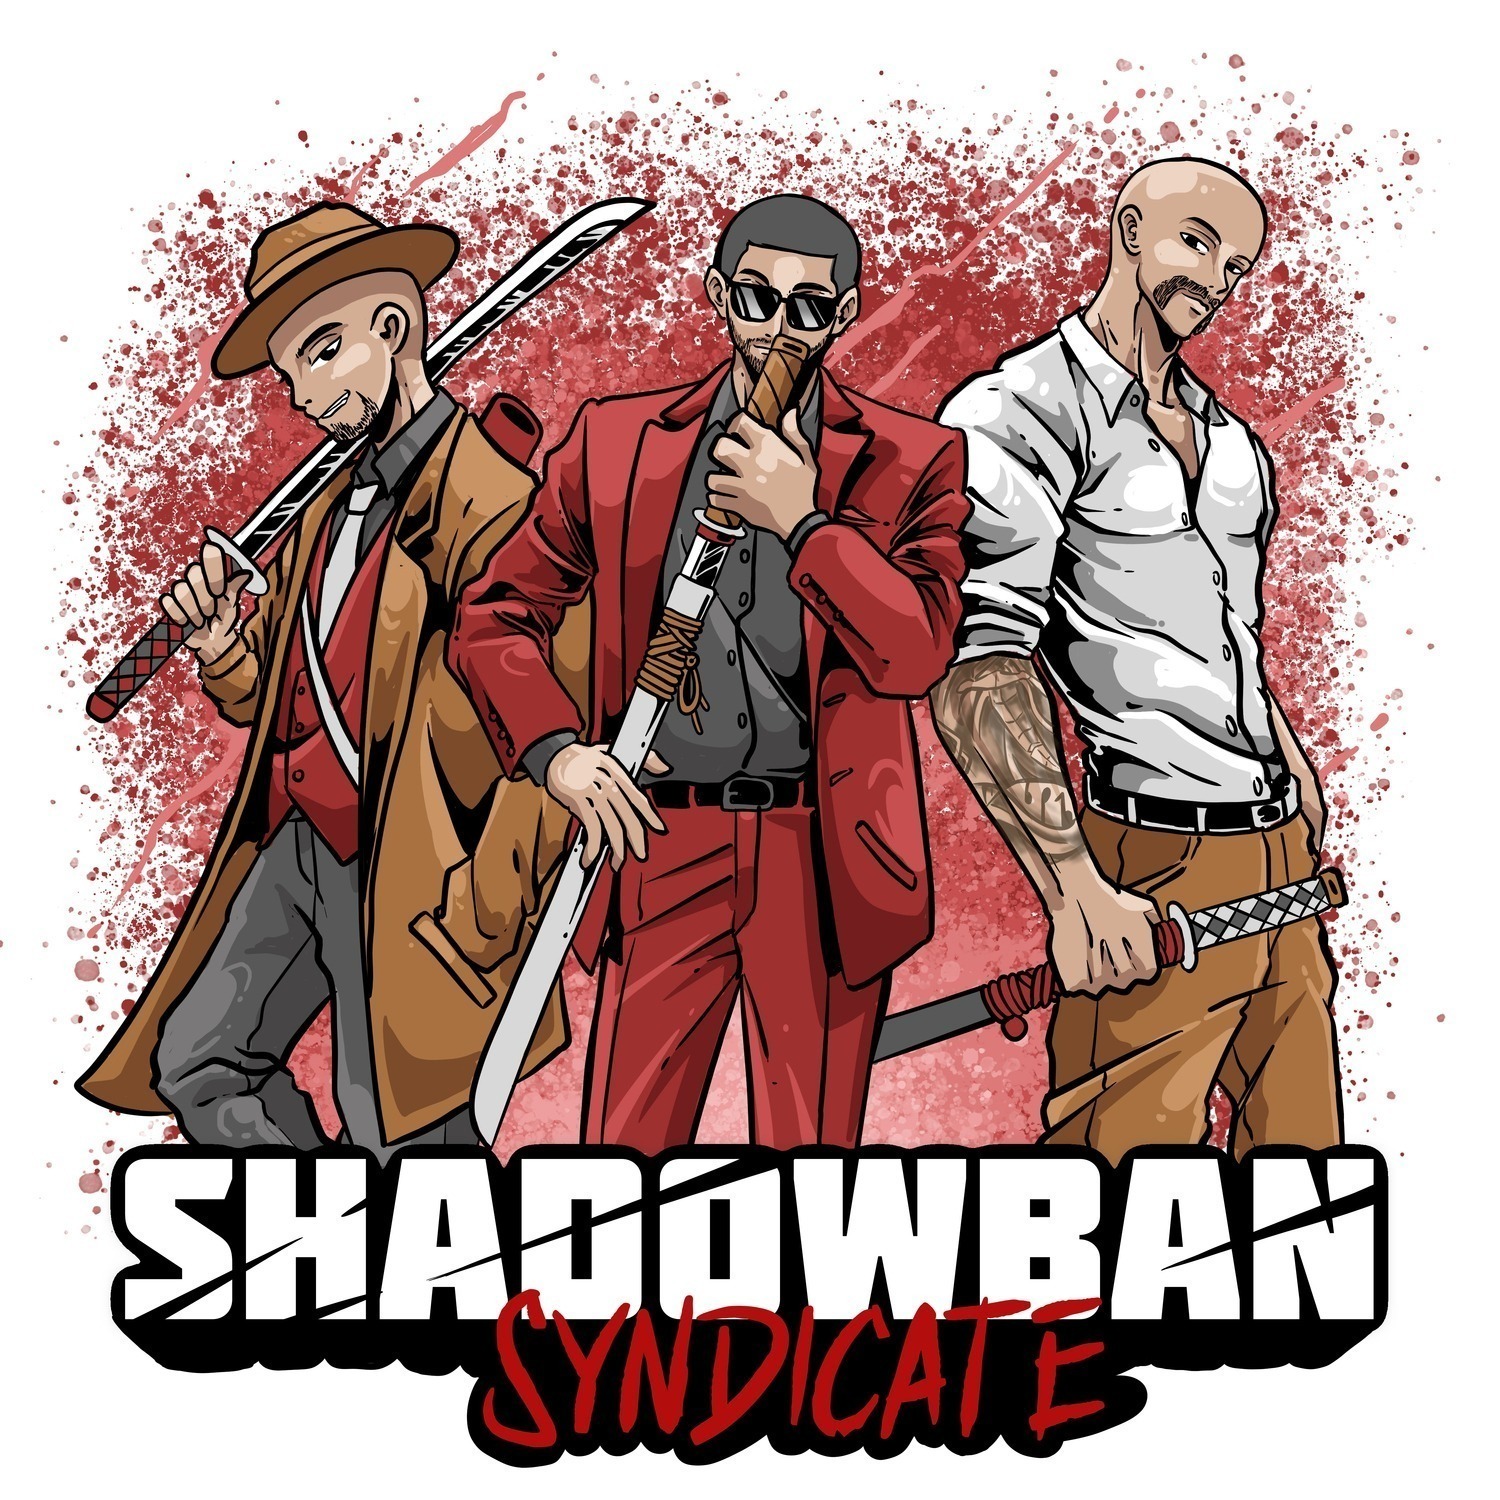 Shadowban Syndicate #5: 